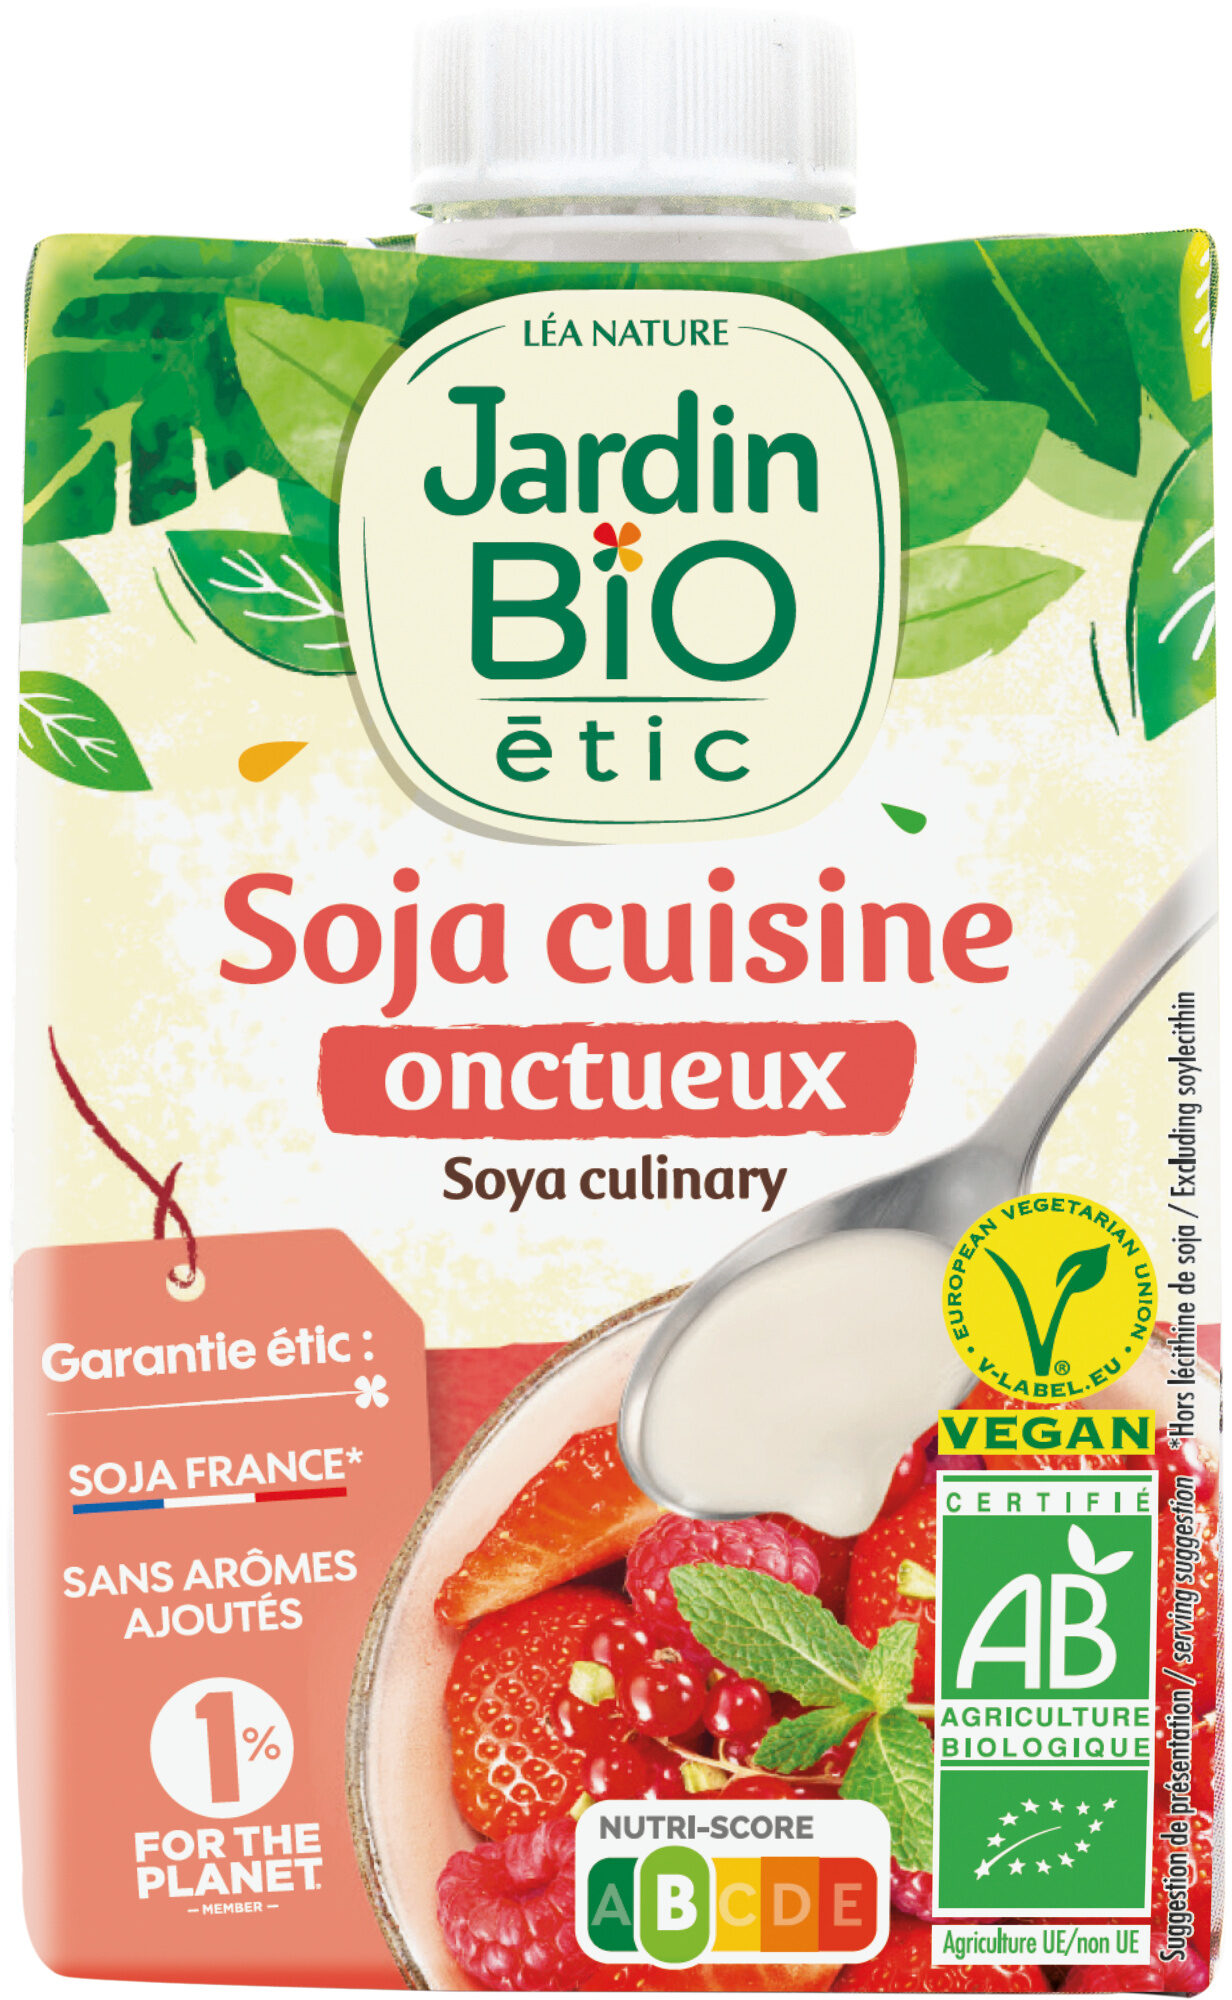 Jardin Bio - Soja cuisine onctueux - Produkt - fr